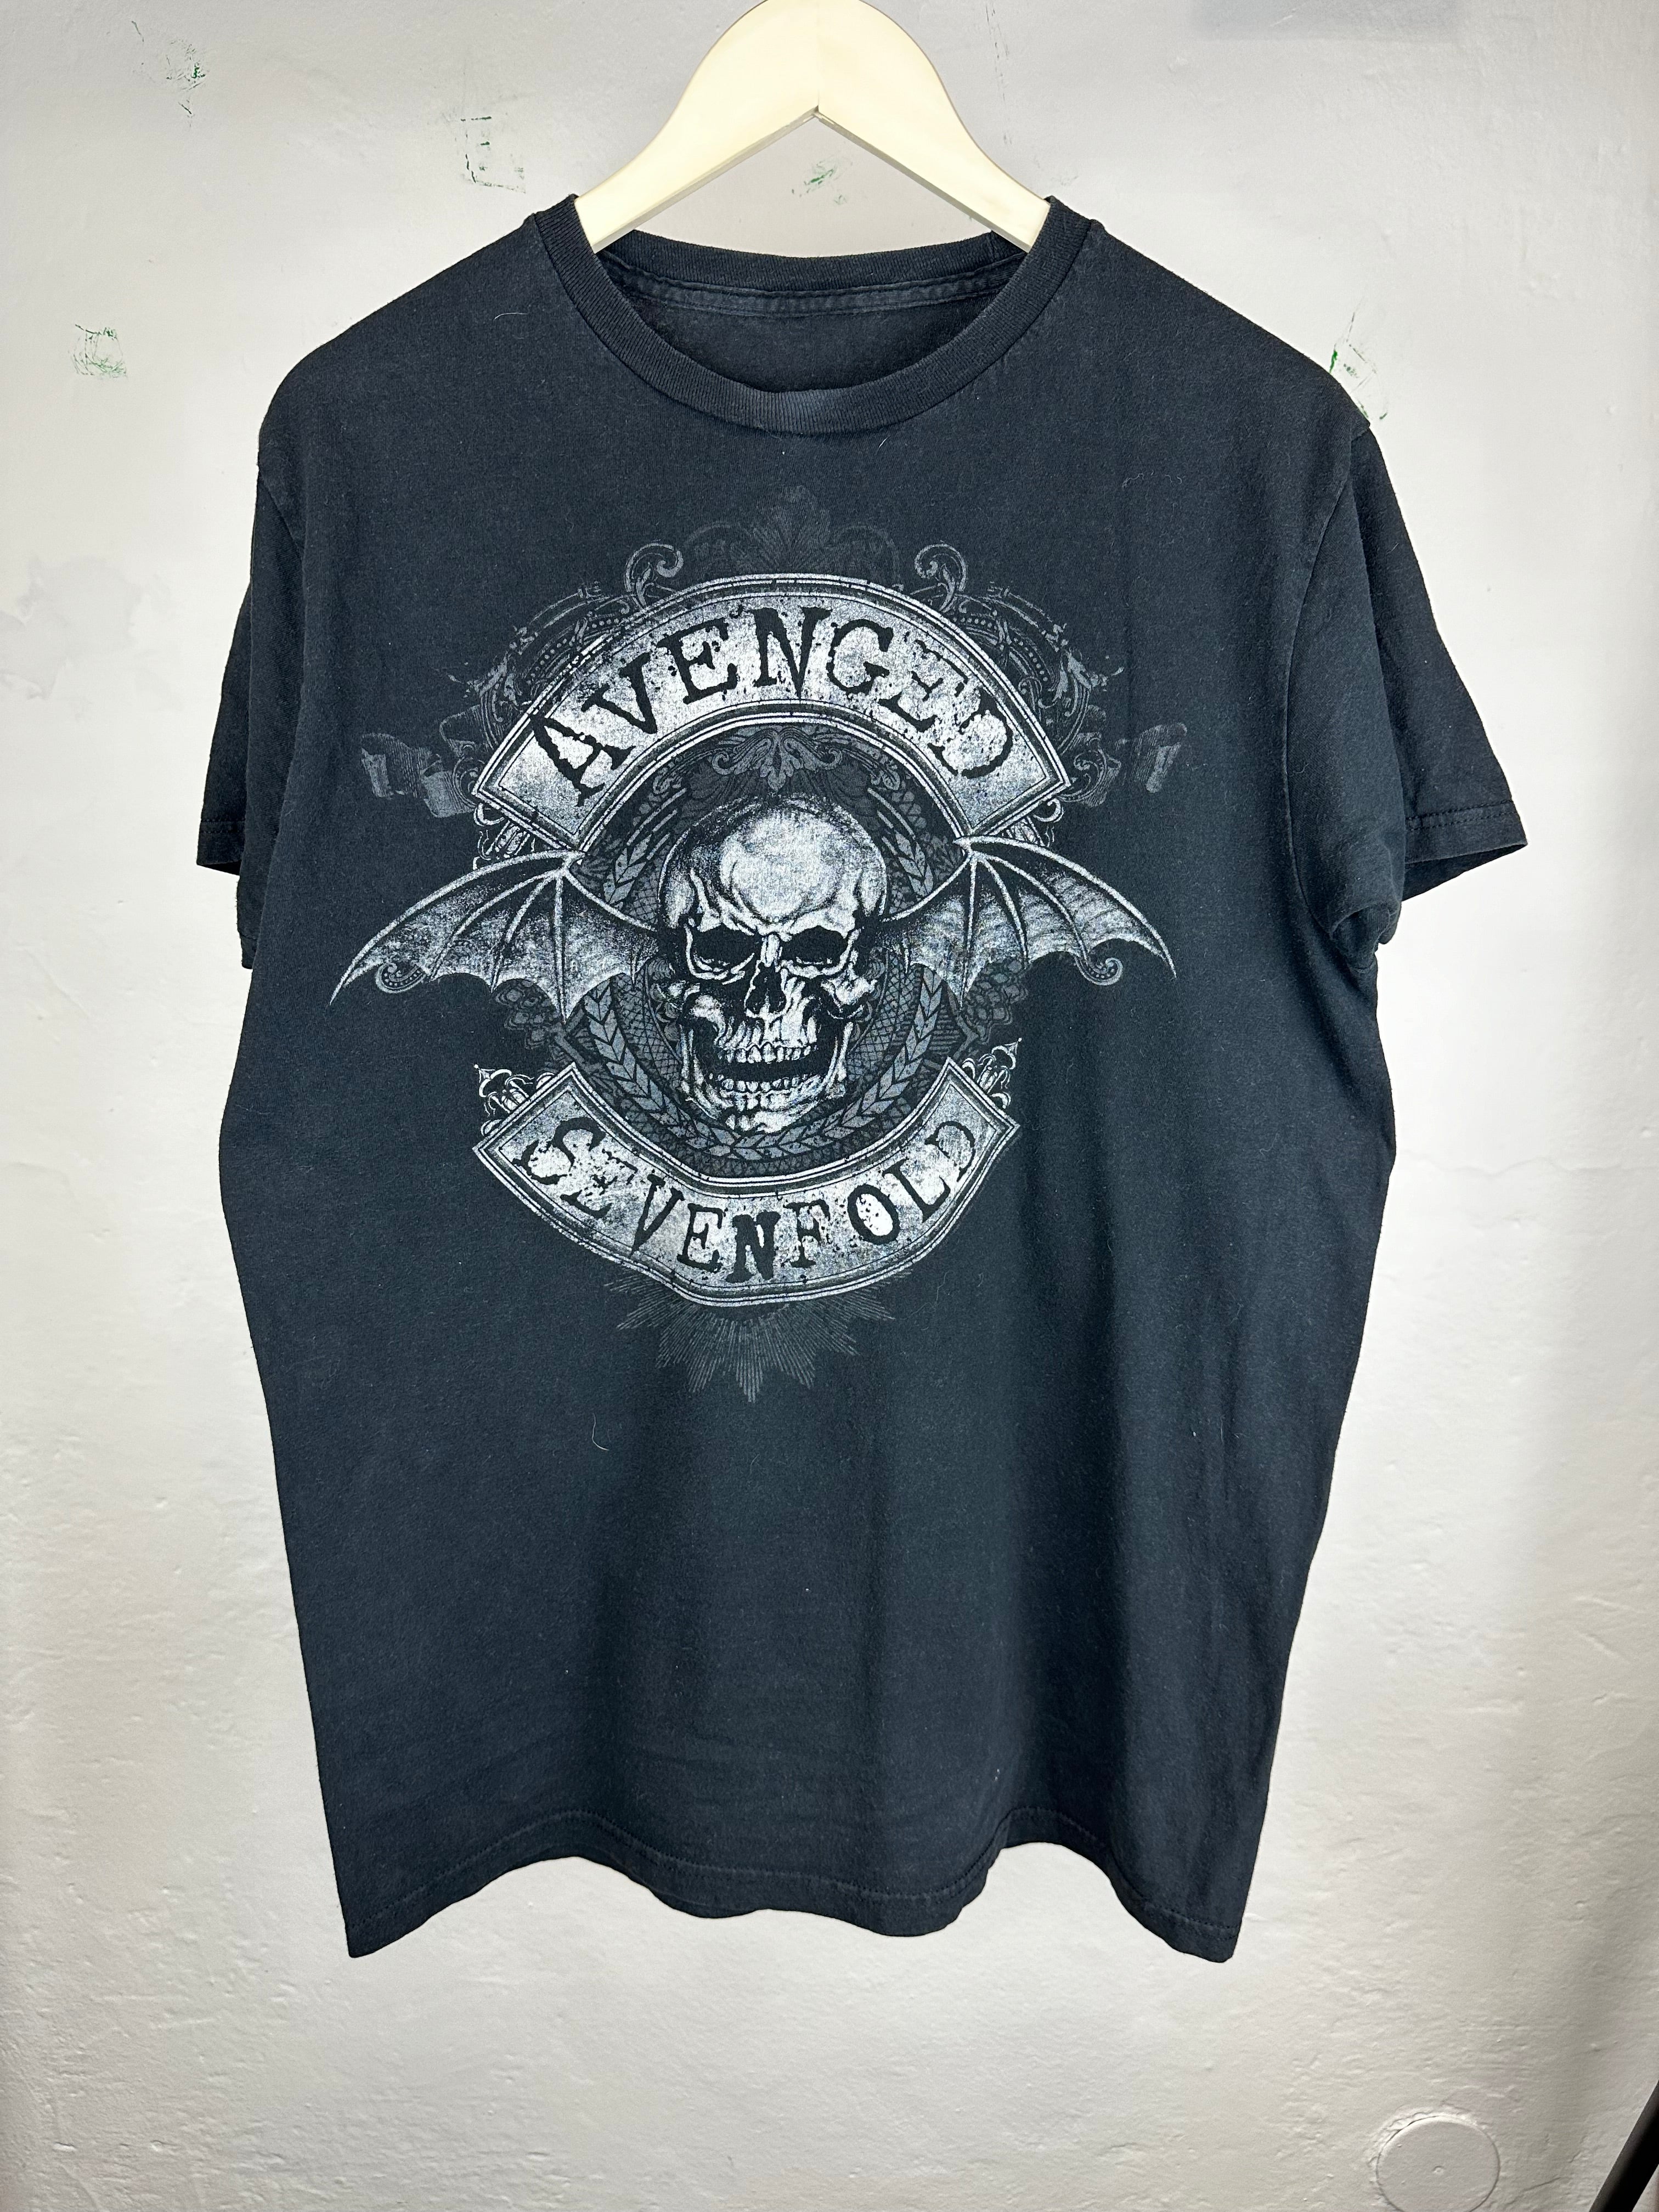 Vintage Avenged Sevenfold t-shirt - size L